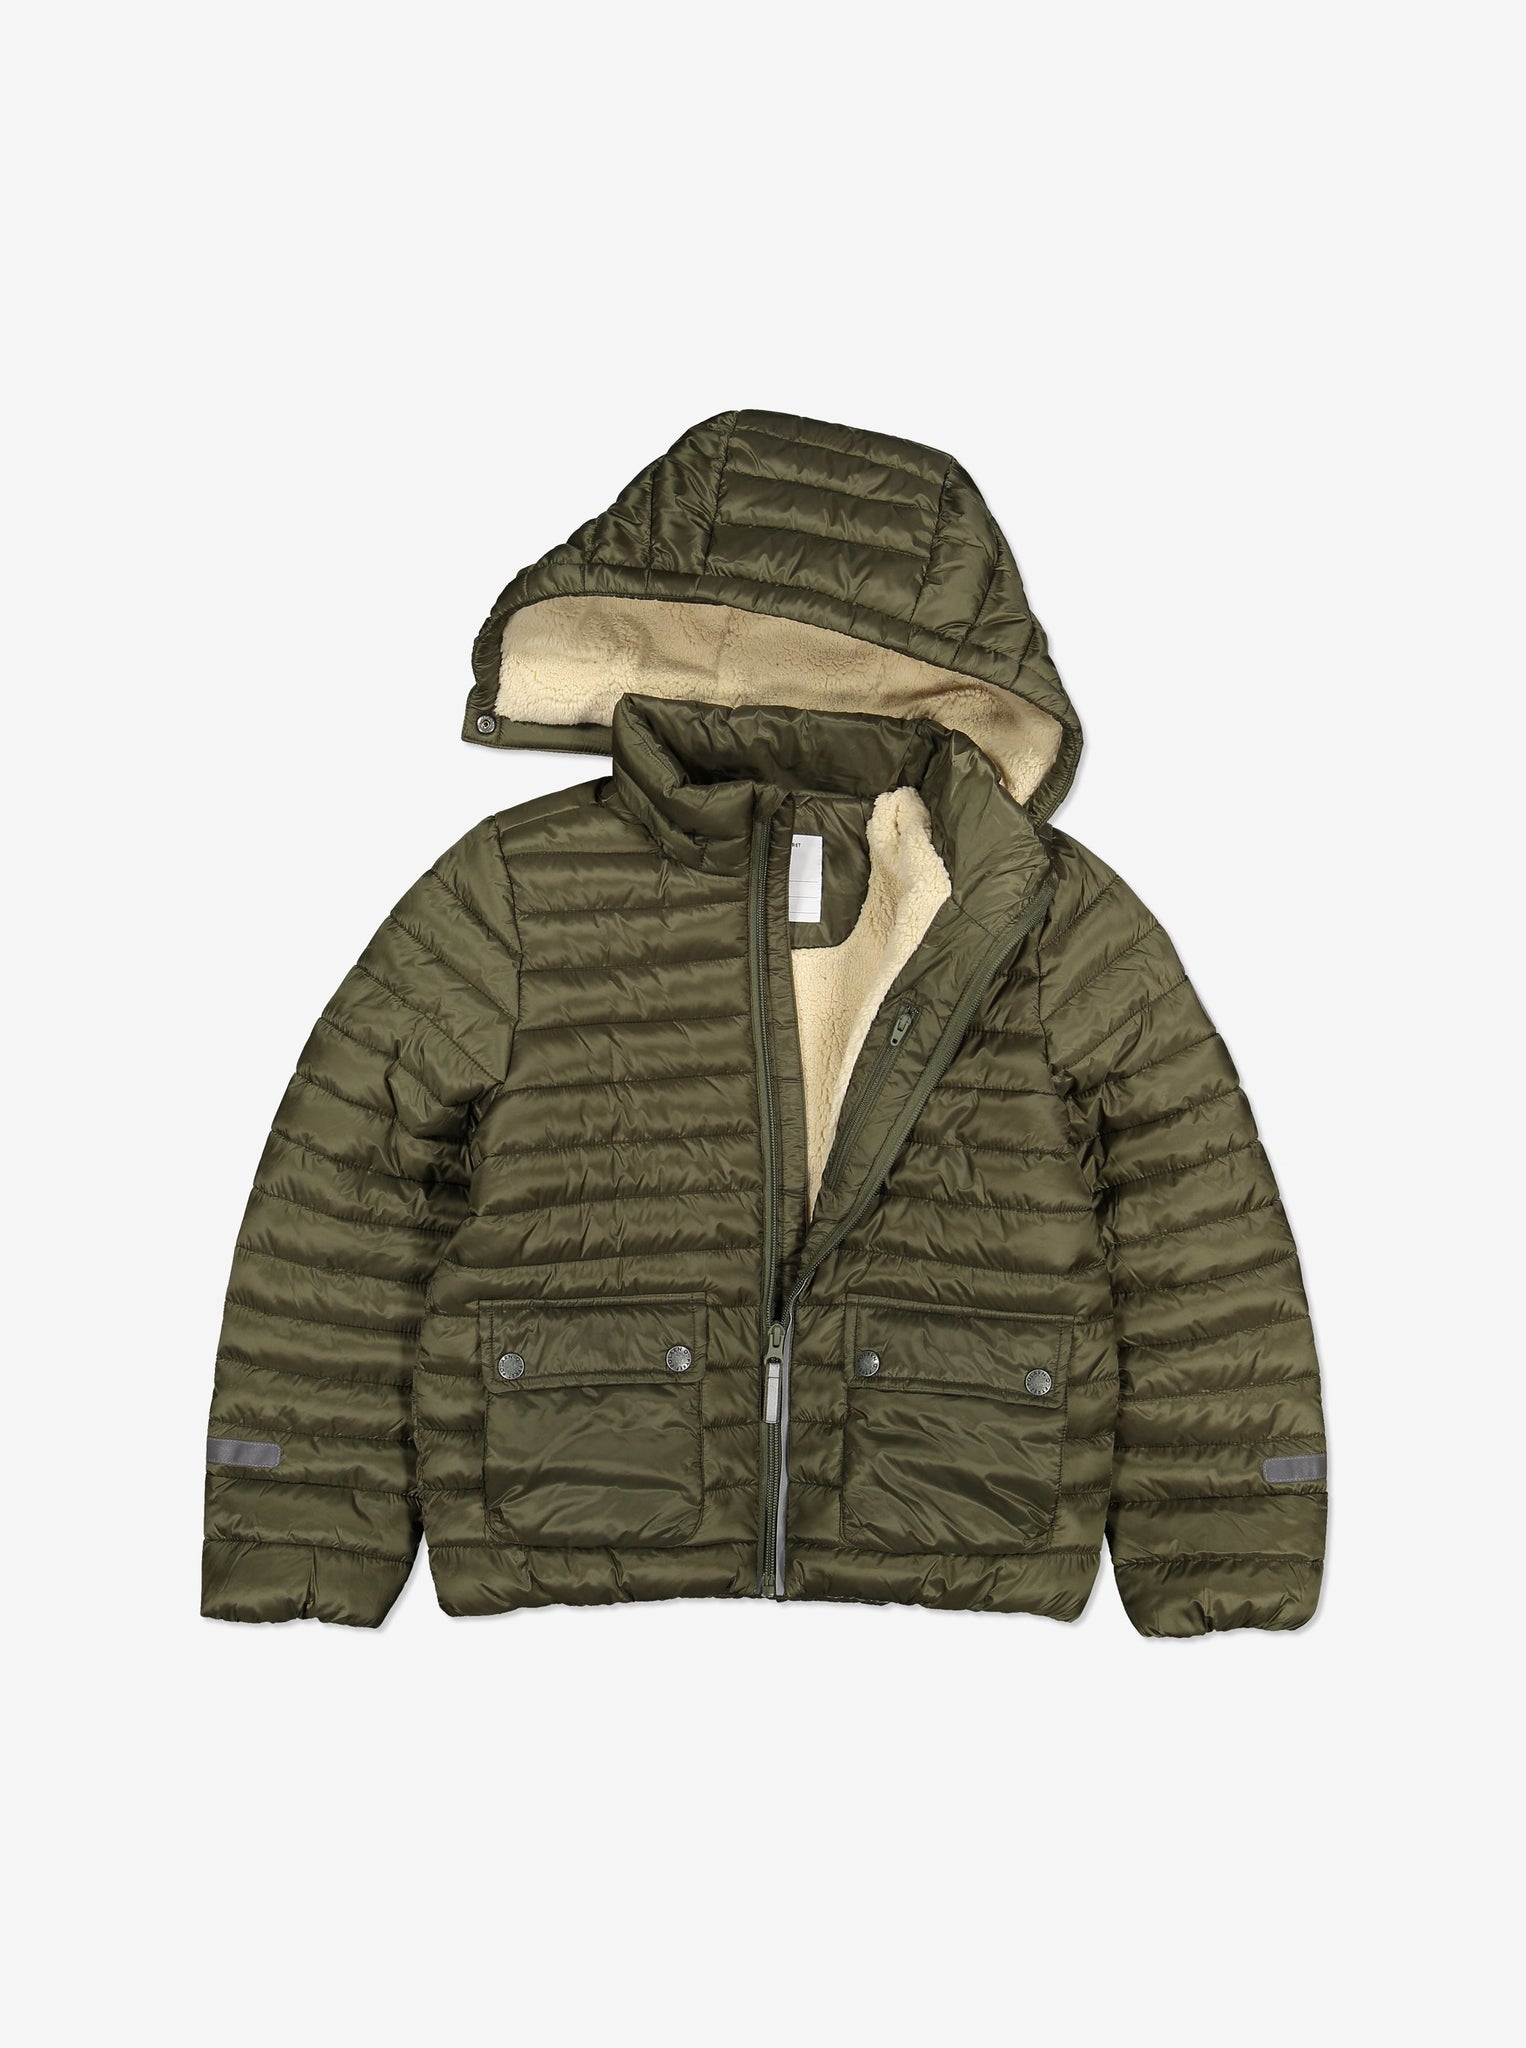 Kids Water Resistant Winter Puffer Jacket-6-12y-Green-Unisex